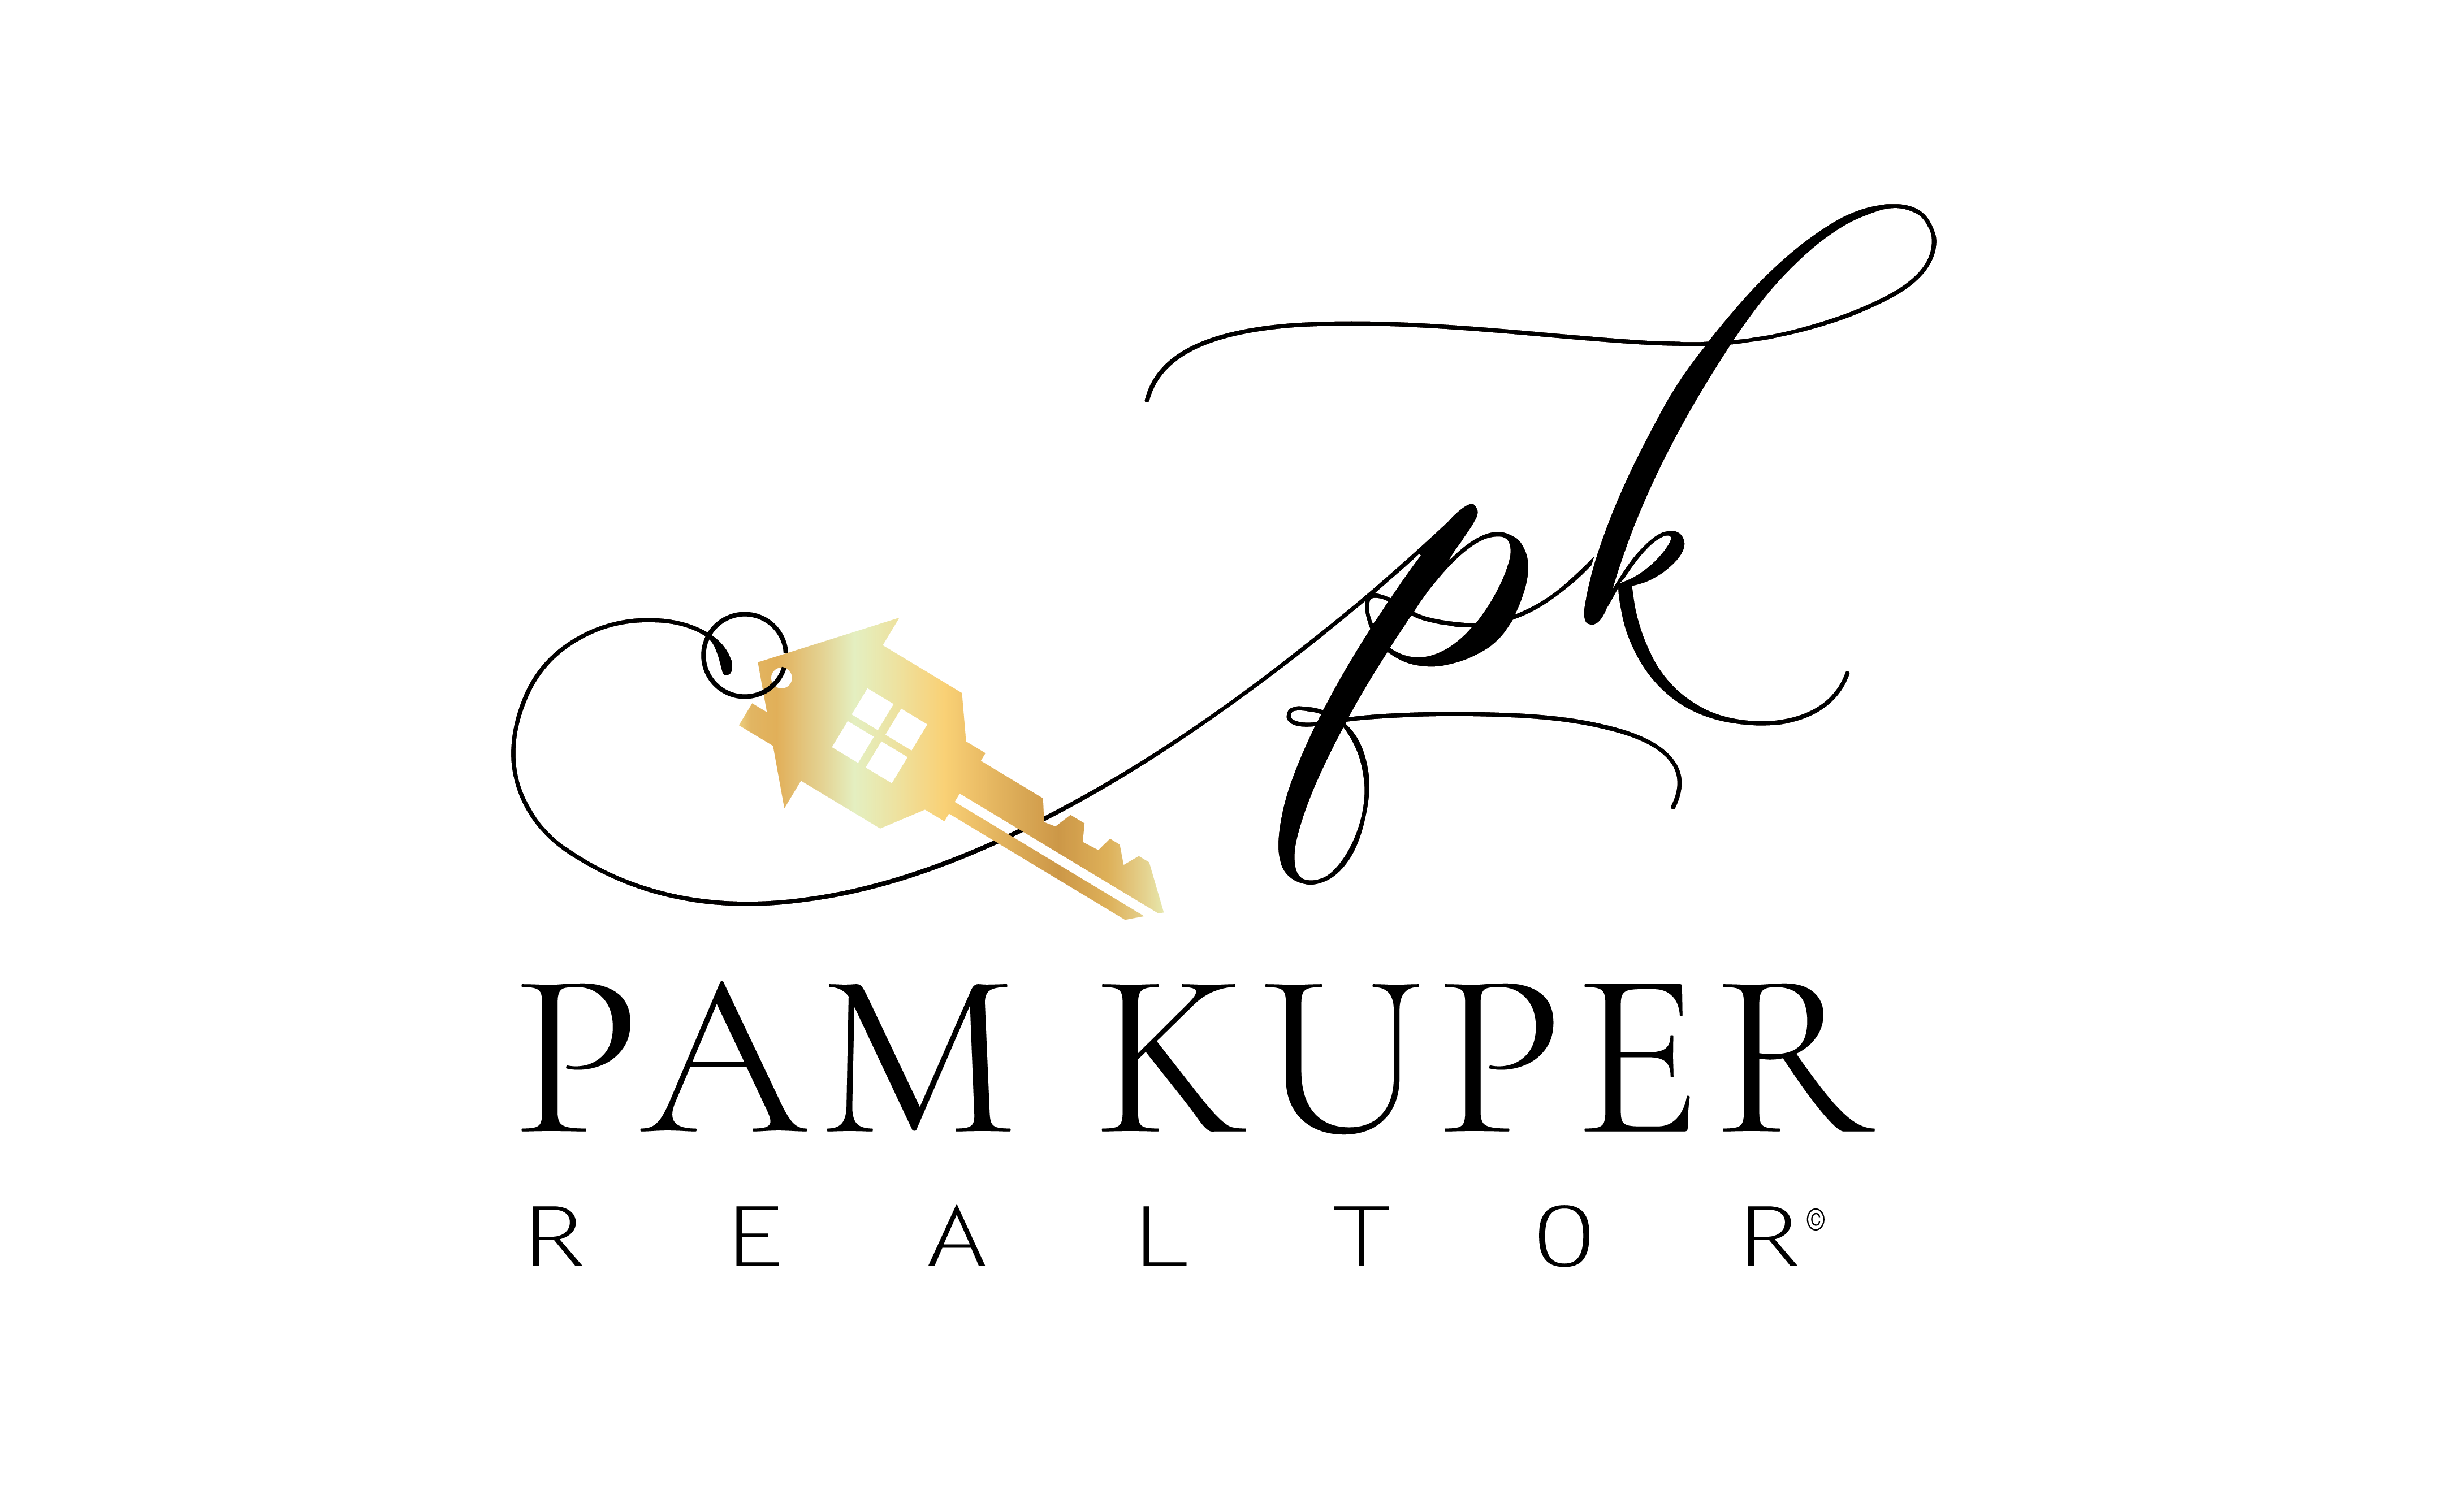 PK Pam Kuper Realtor Logo with Gold Key